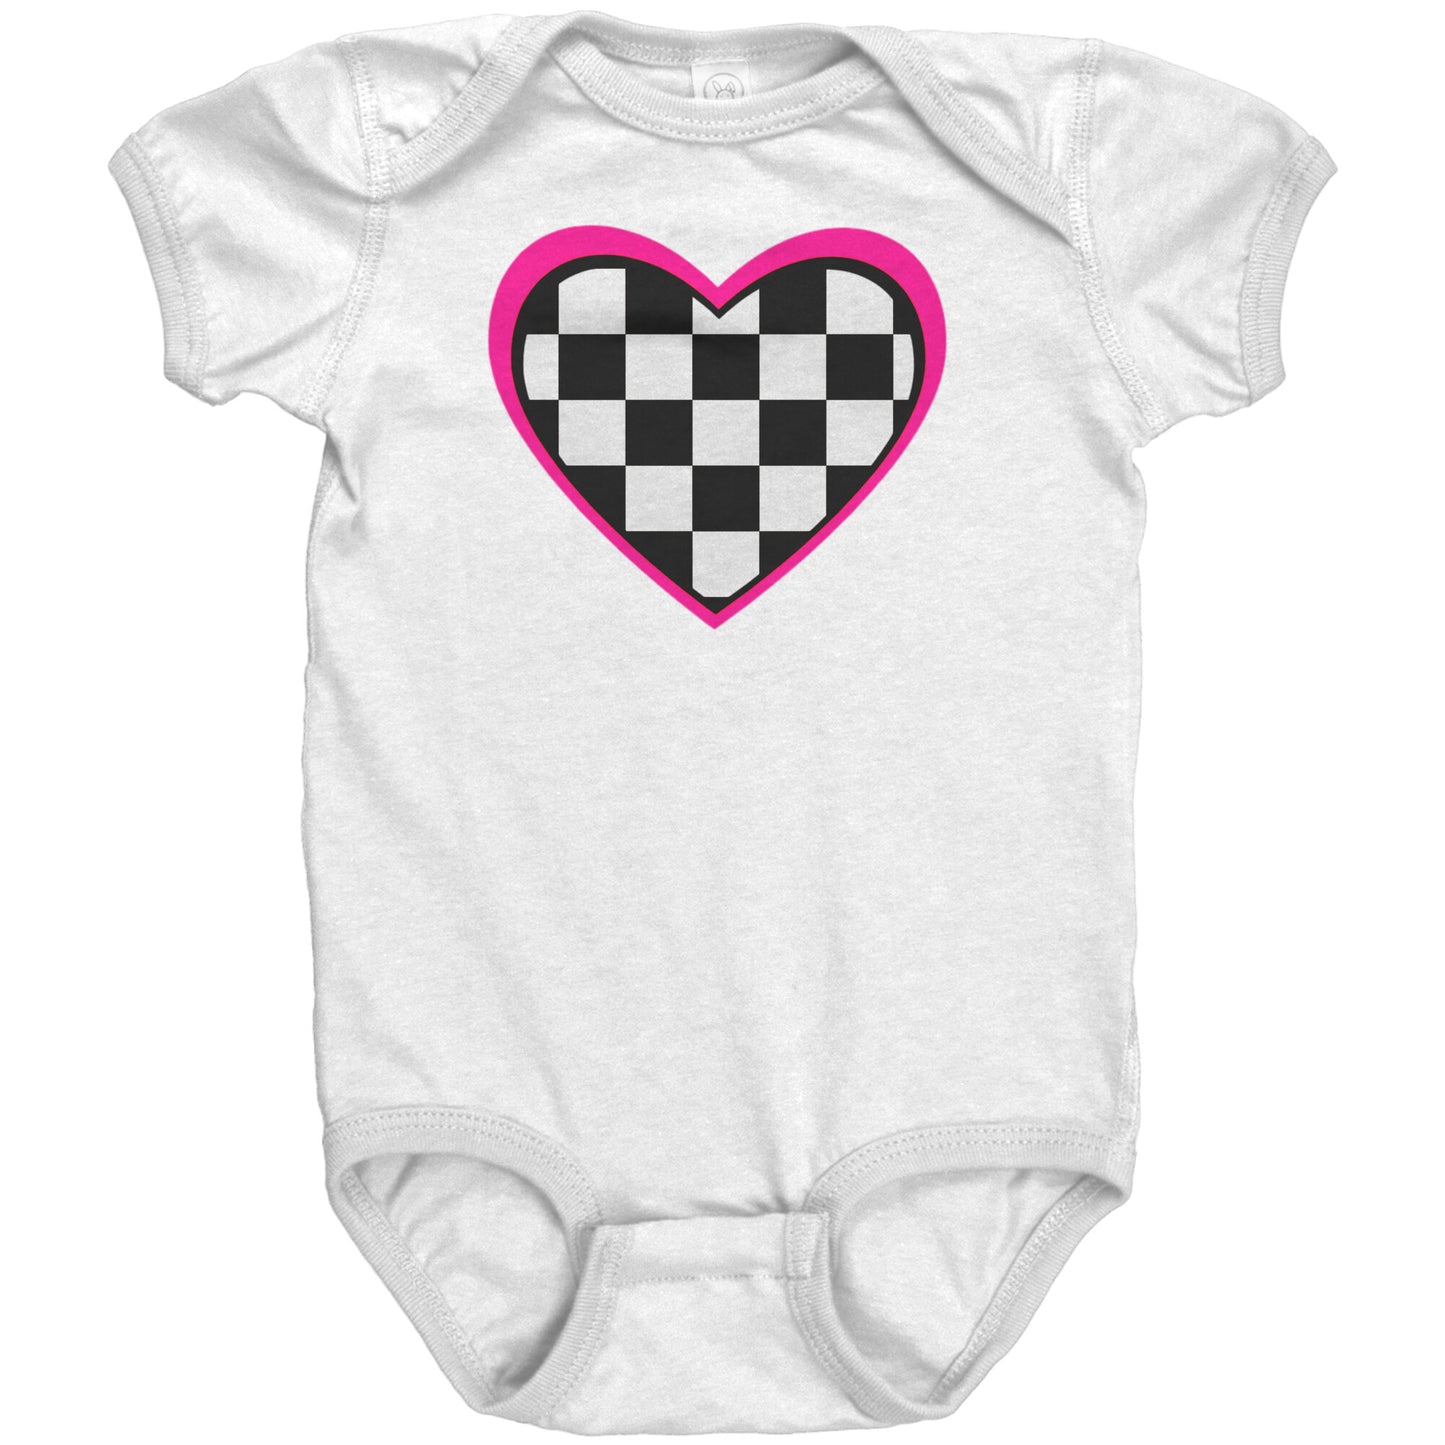 PINK CHECKERED FLAG RACING HEART INFANT BODYSUIT